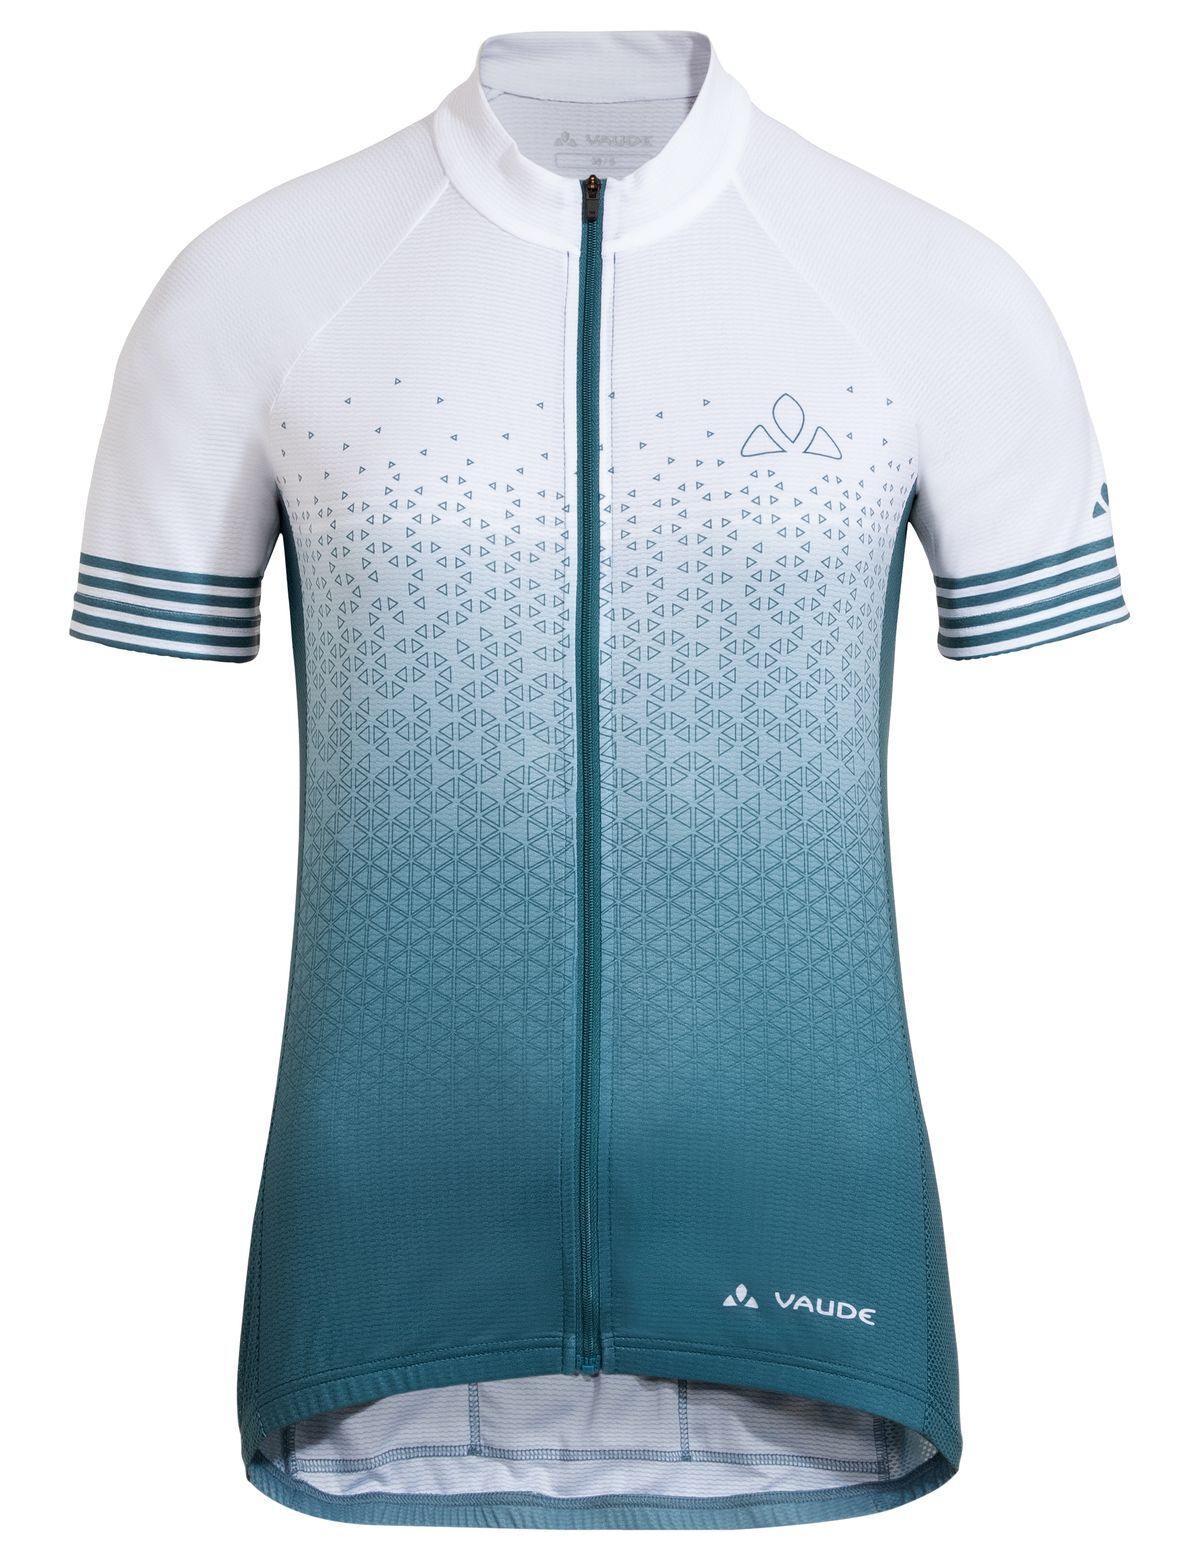 Vaude Bagana FZ Tricot - Cycling jersey - Women's